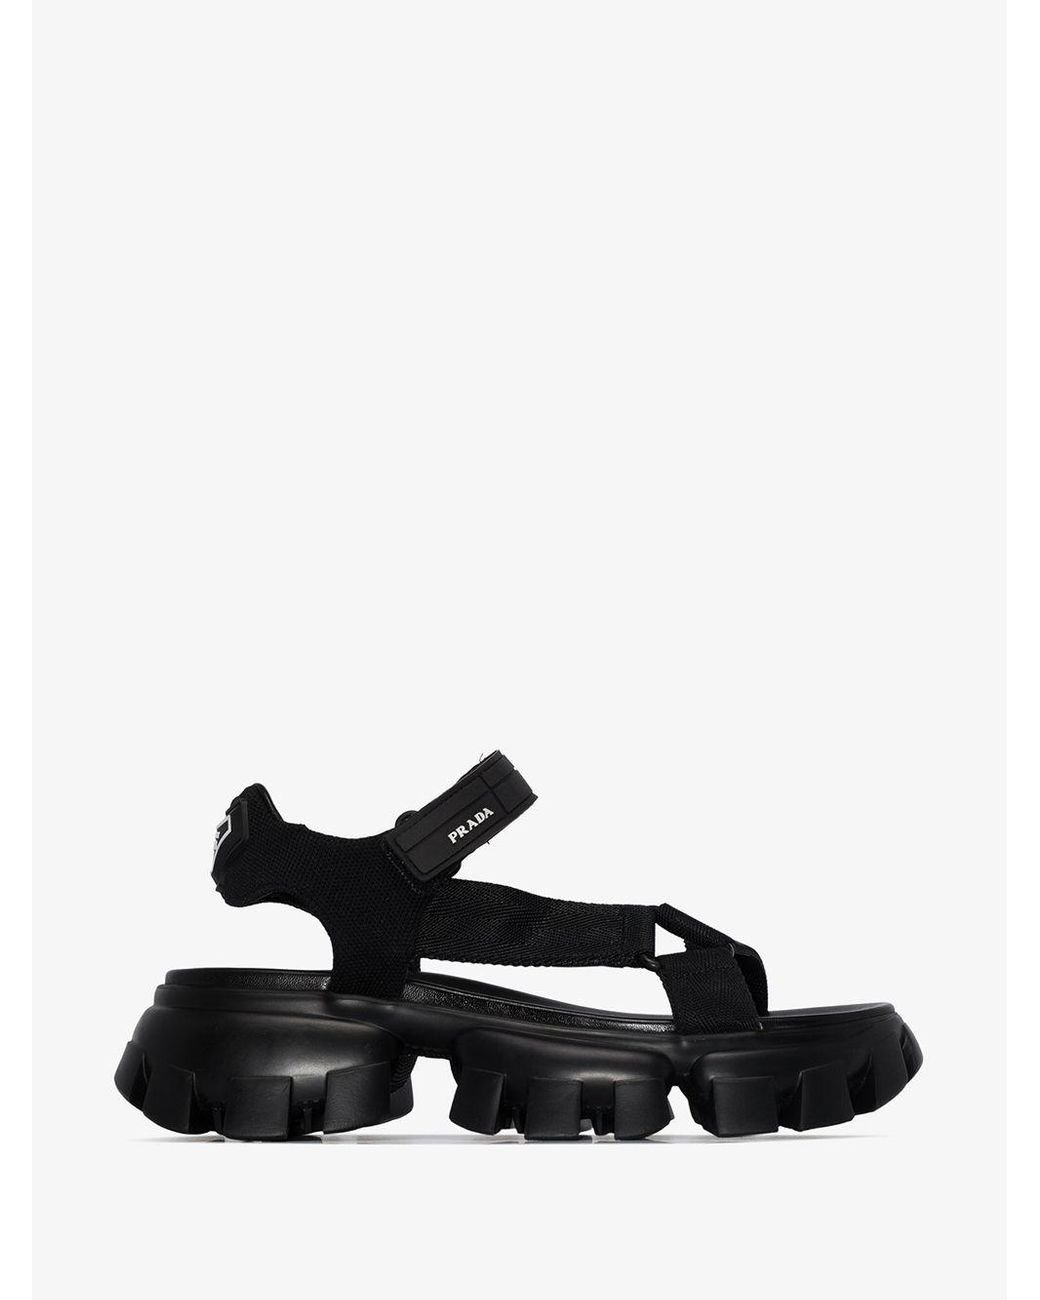 Prada Thunder Chunky Sandals in Black | Lyst